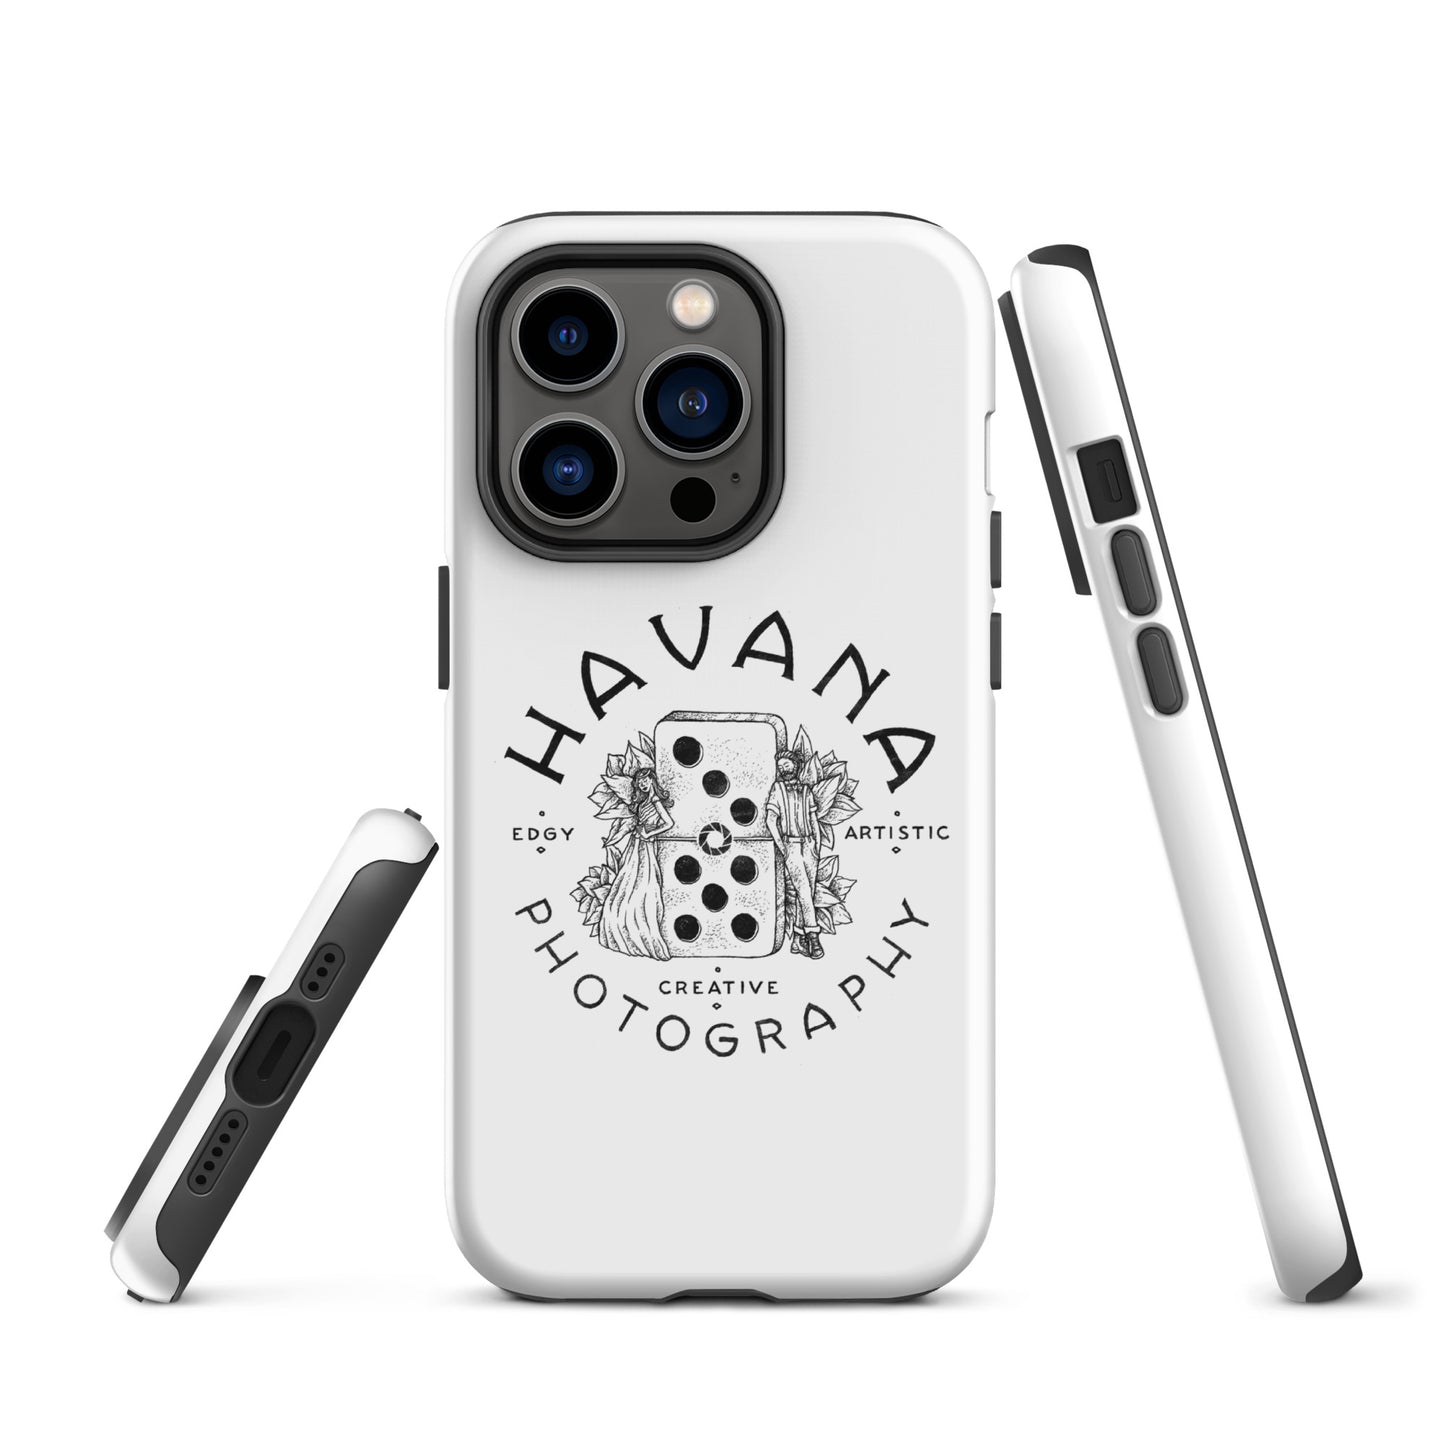 Havana Tough iPhone case